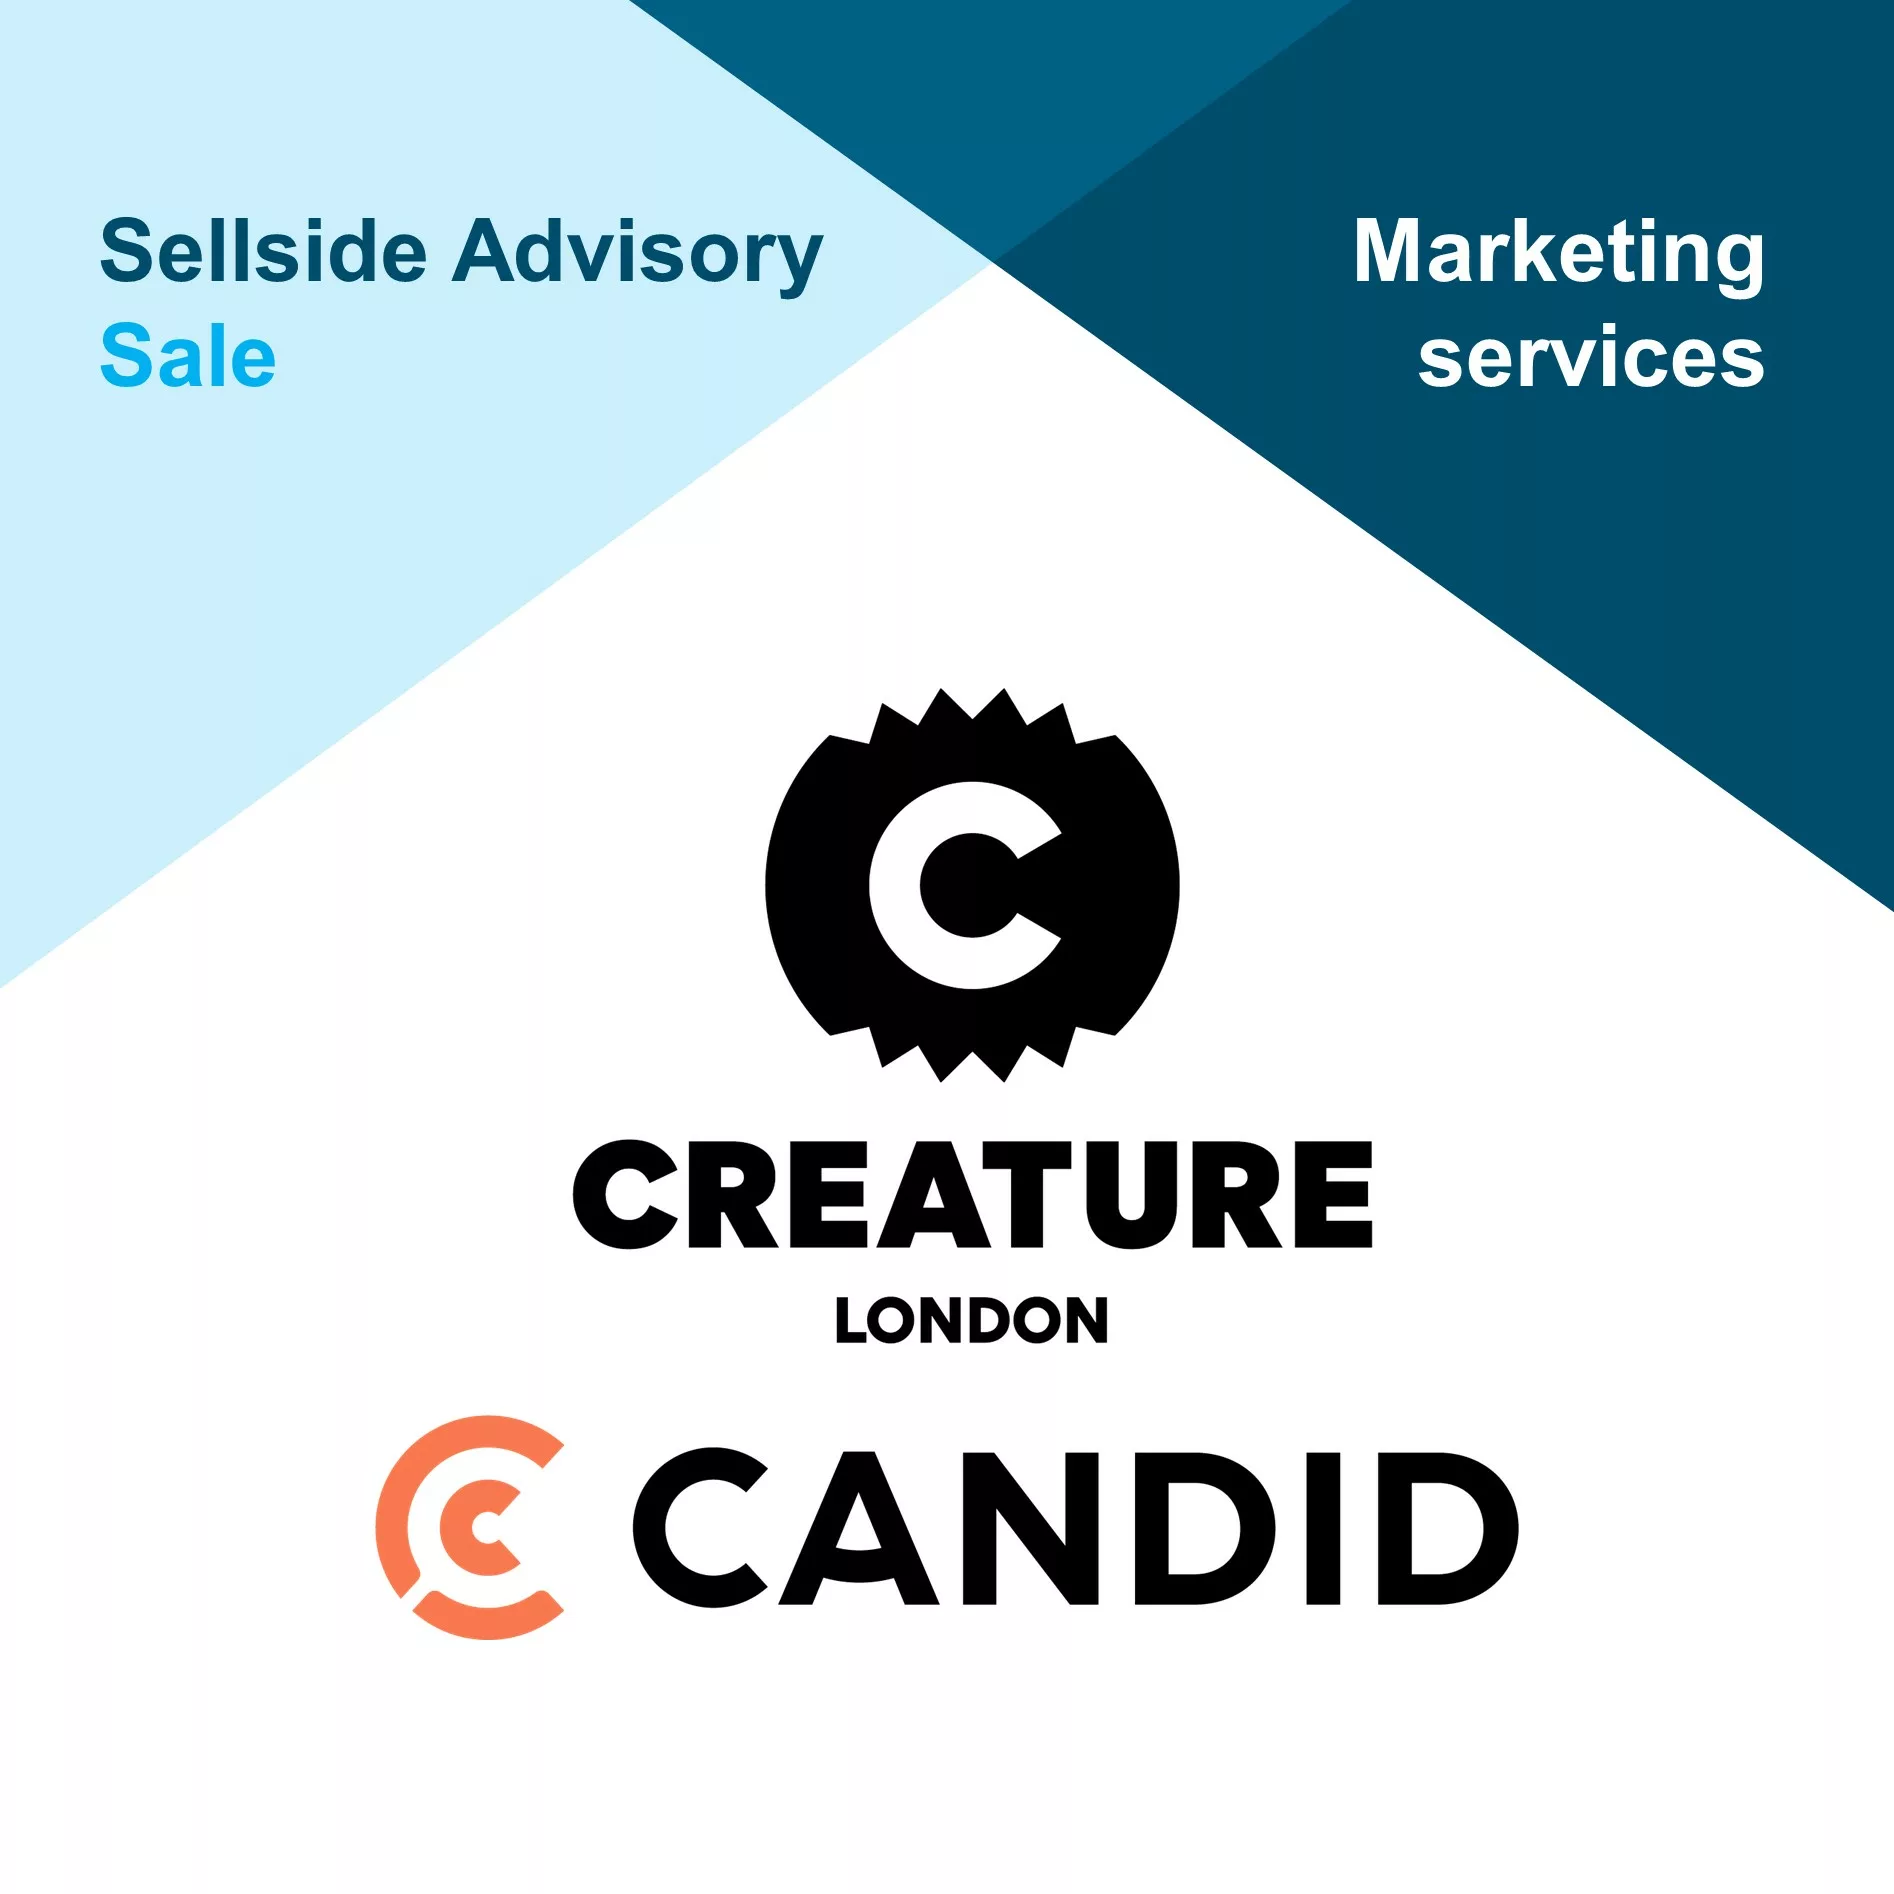 Creature and Candid sellside advisory